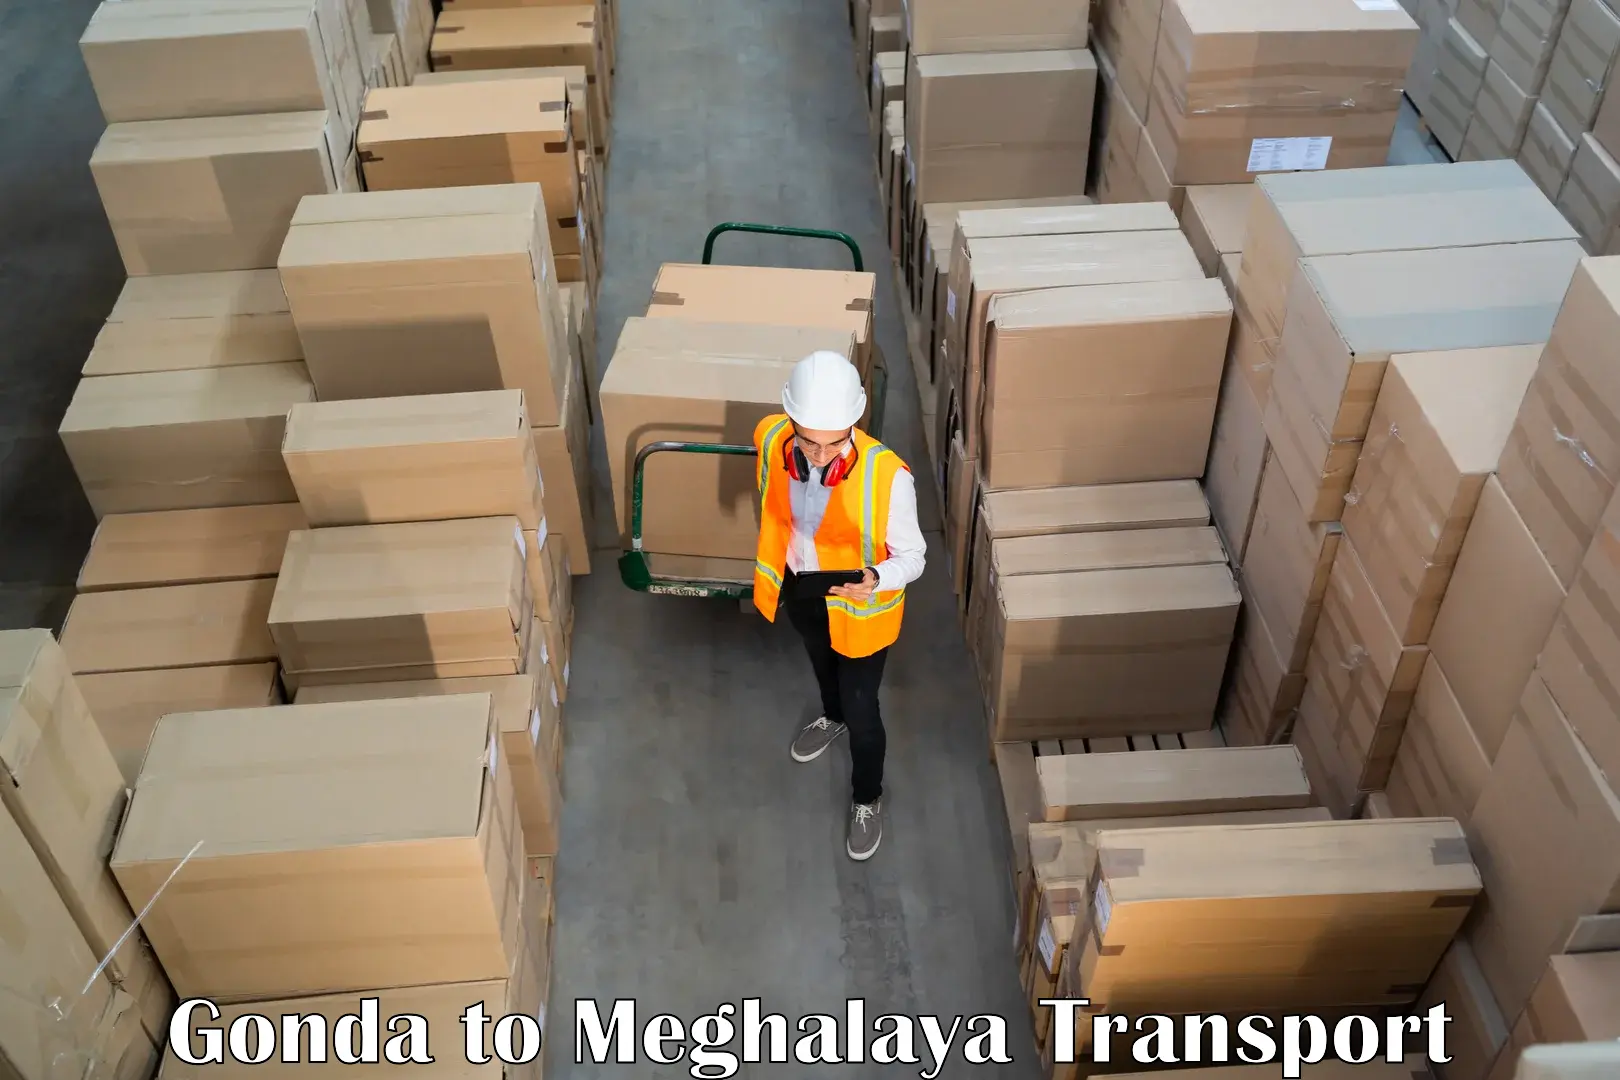 Truck transport companies in India Gonda to Meghalaya